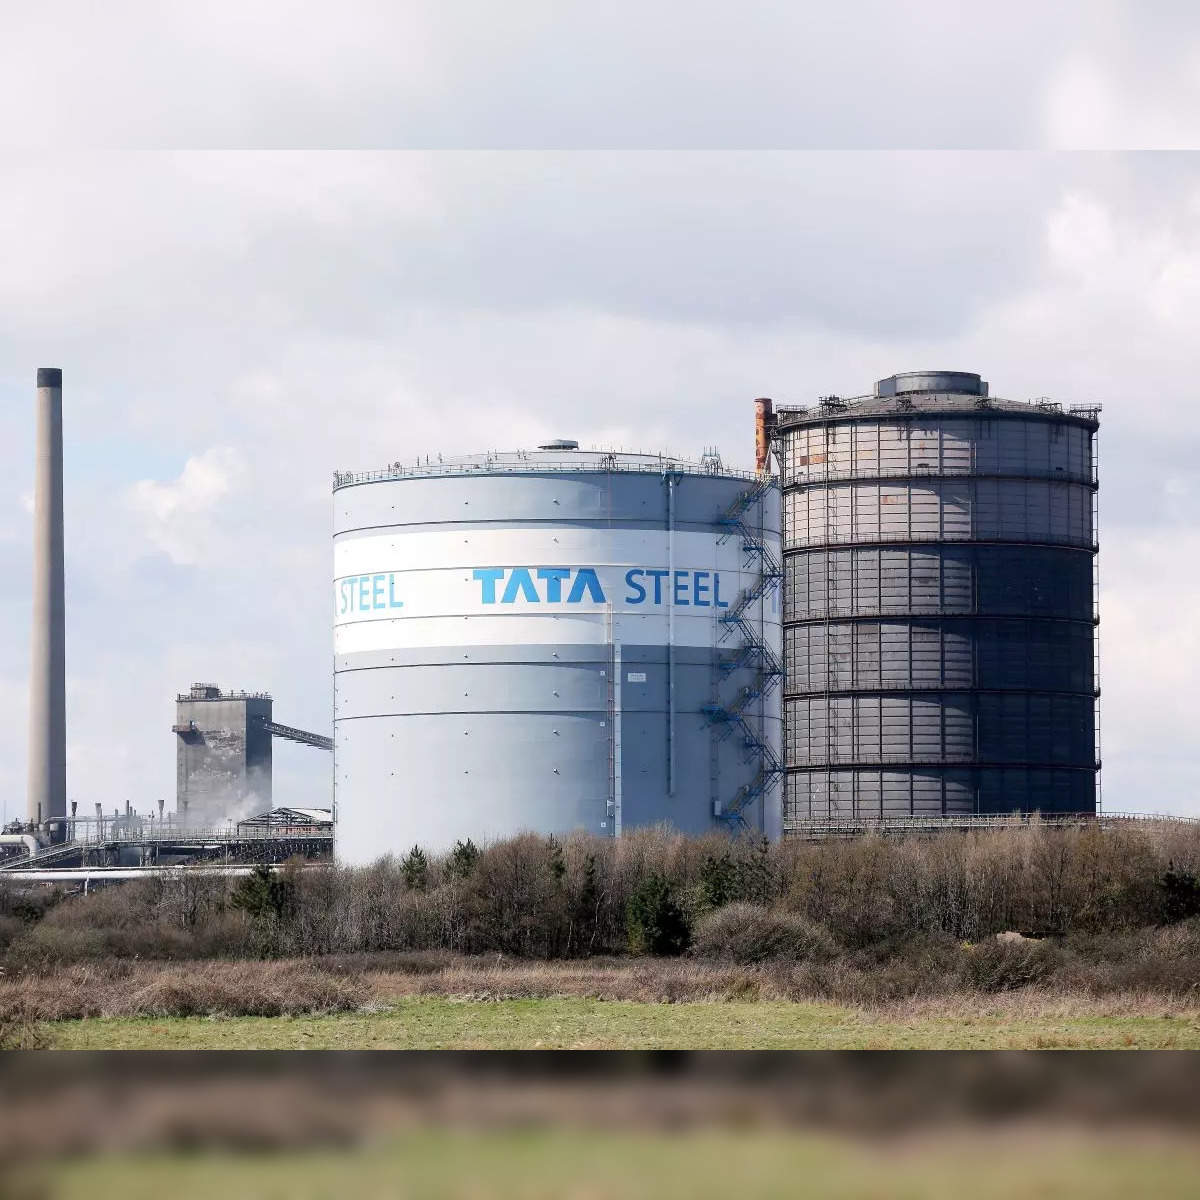 Tata Steel Recruitment 2024 Current Careers Opportunities